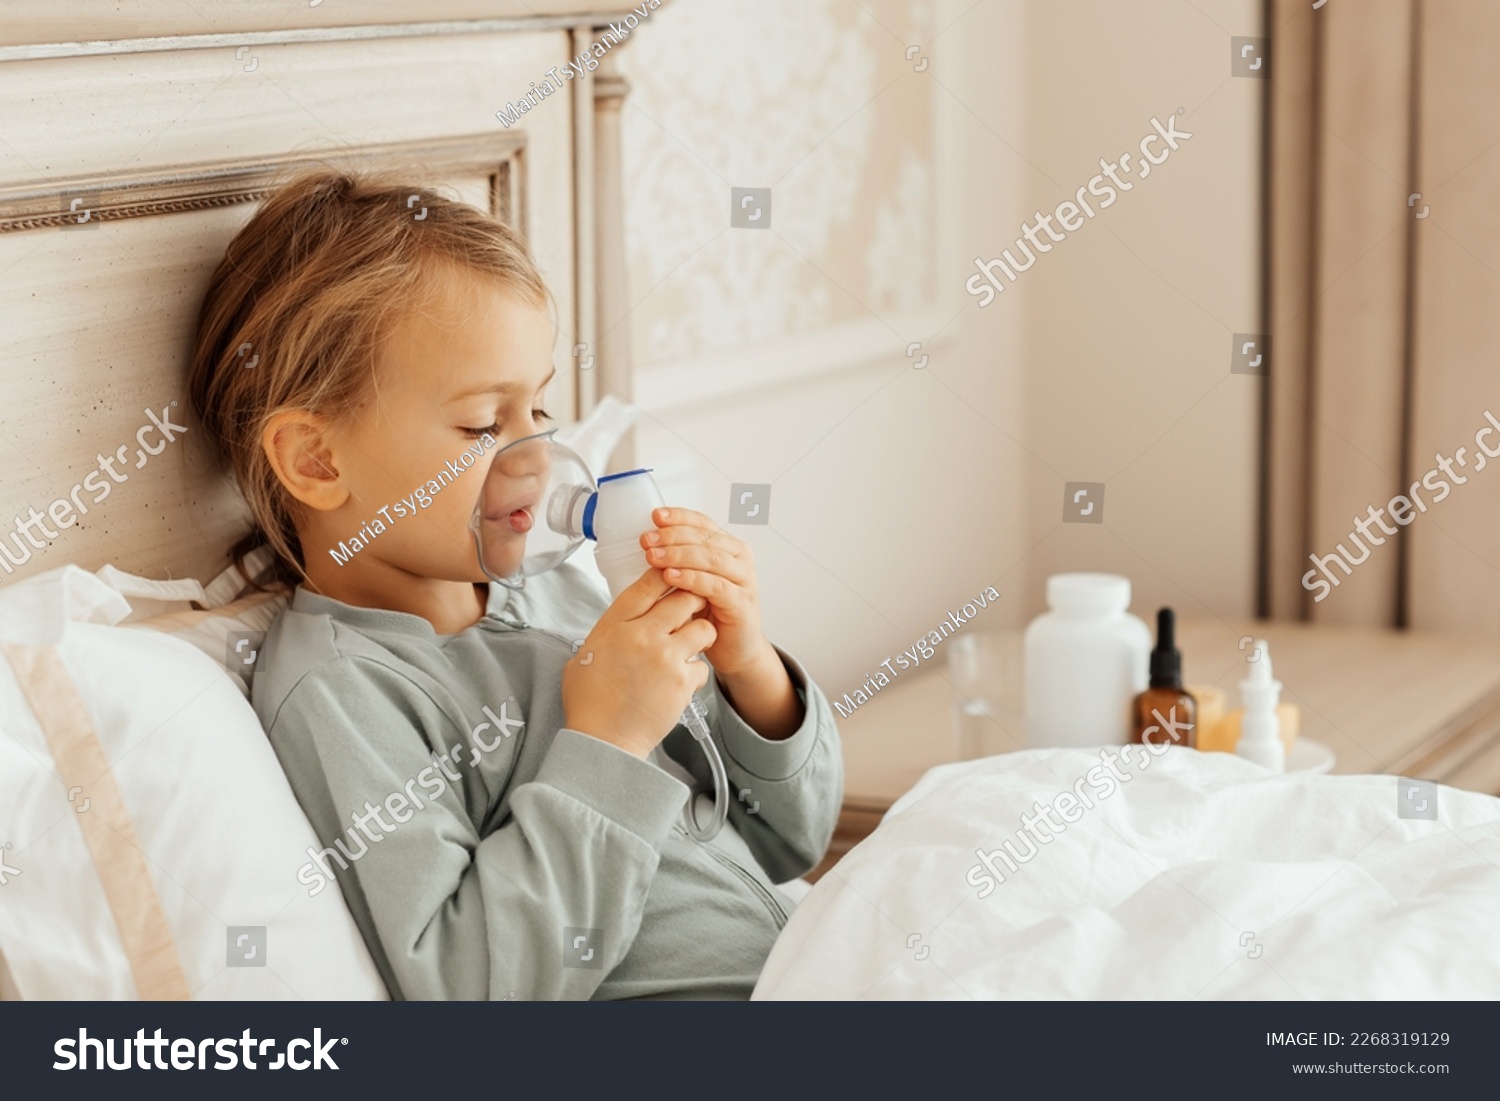 Little girl kid making inhalation with nebulizer at home at bed. child asthma inhaler inhalation steam sick pacient inhaling through inhaler mask. Self treatment of the respiratory tract #2268319129